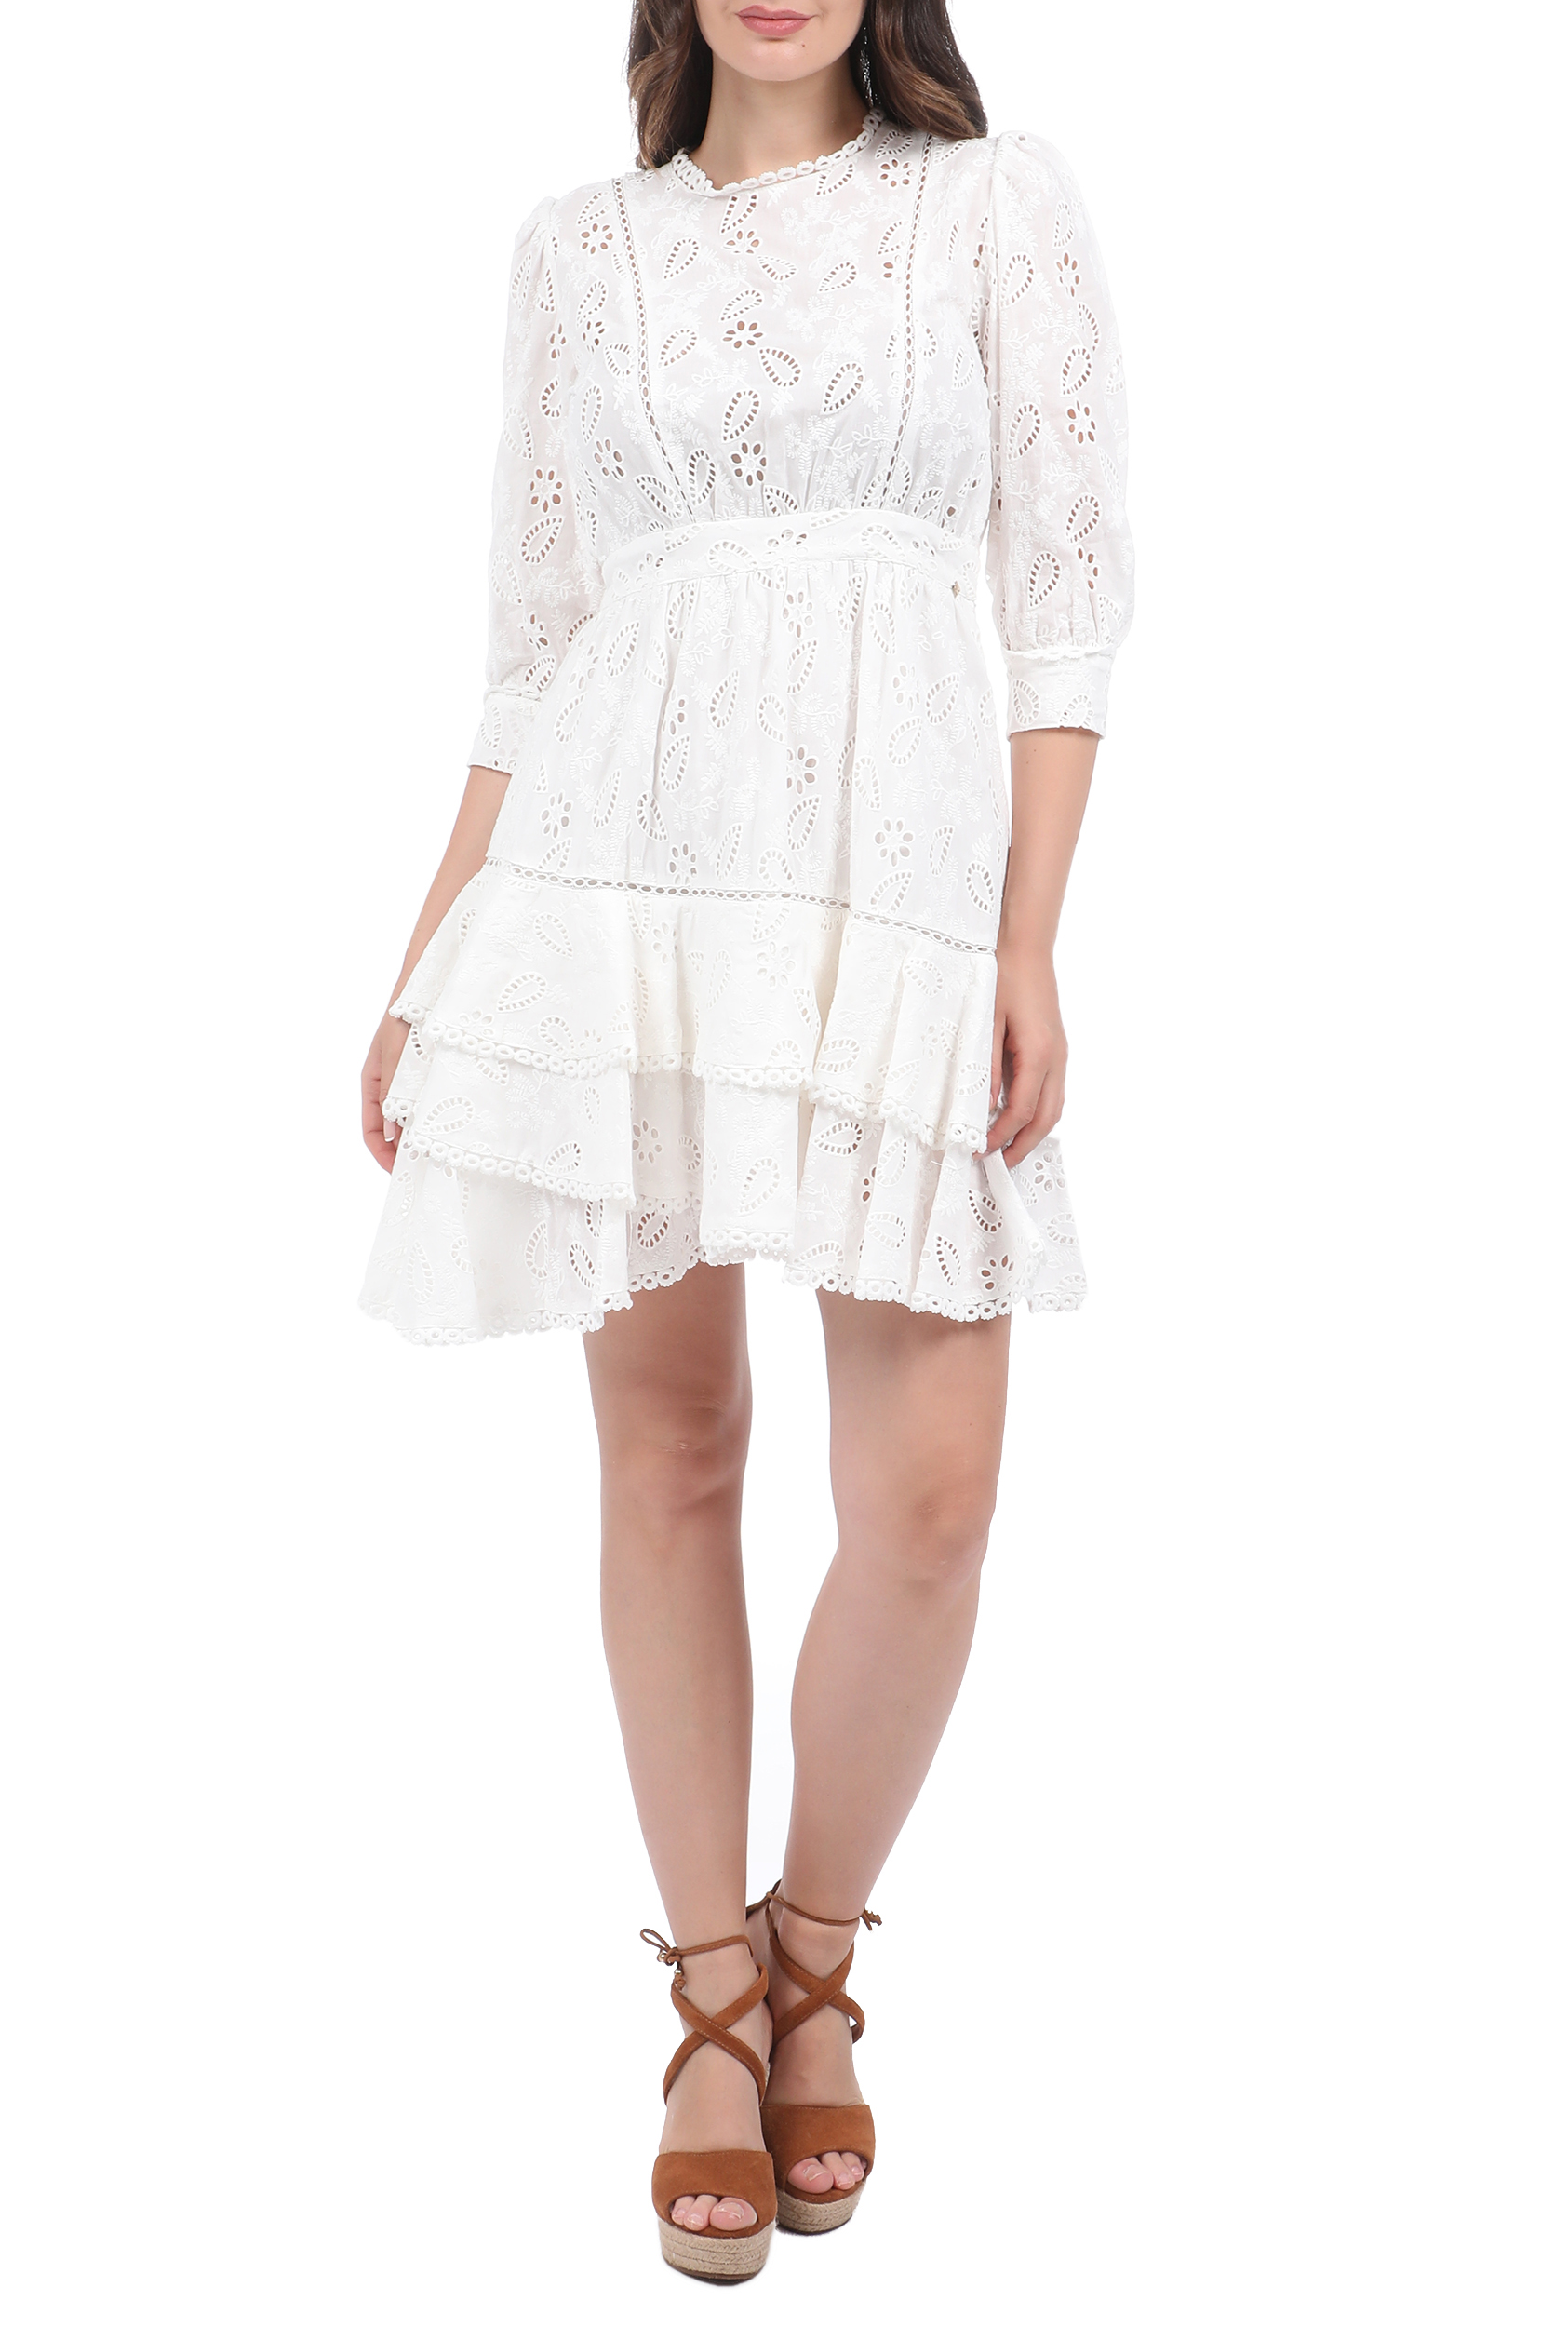 KOCCA – Γυνακειο mini φορεμα KOCCA TEJAL λευκο